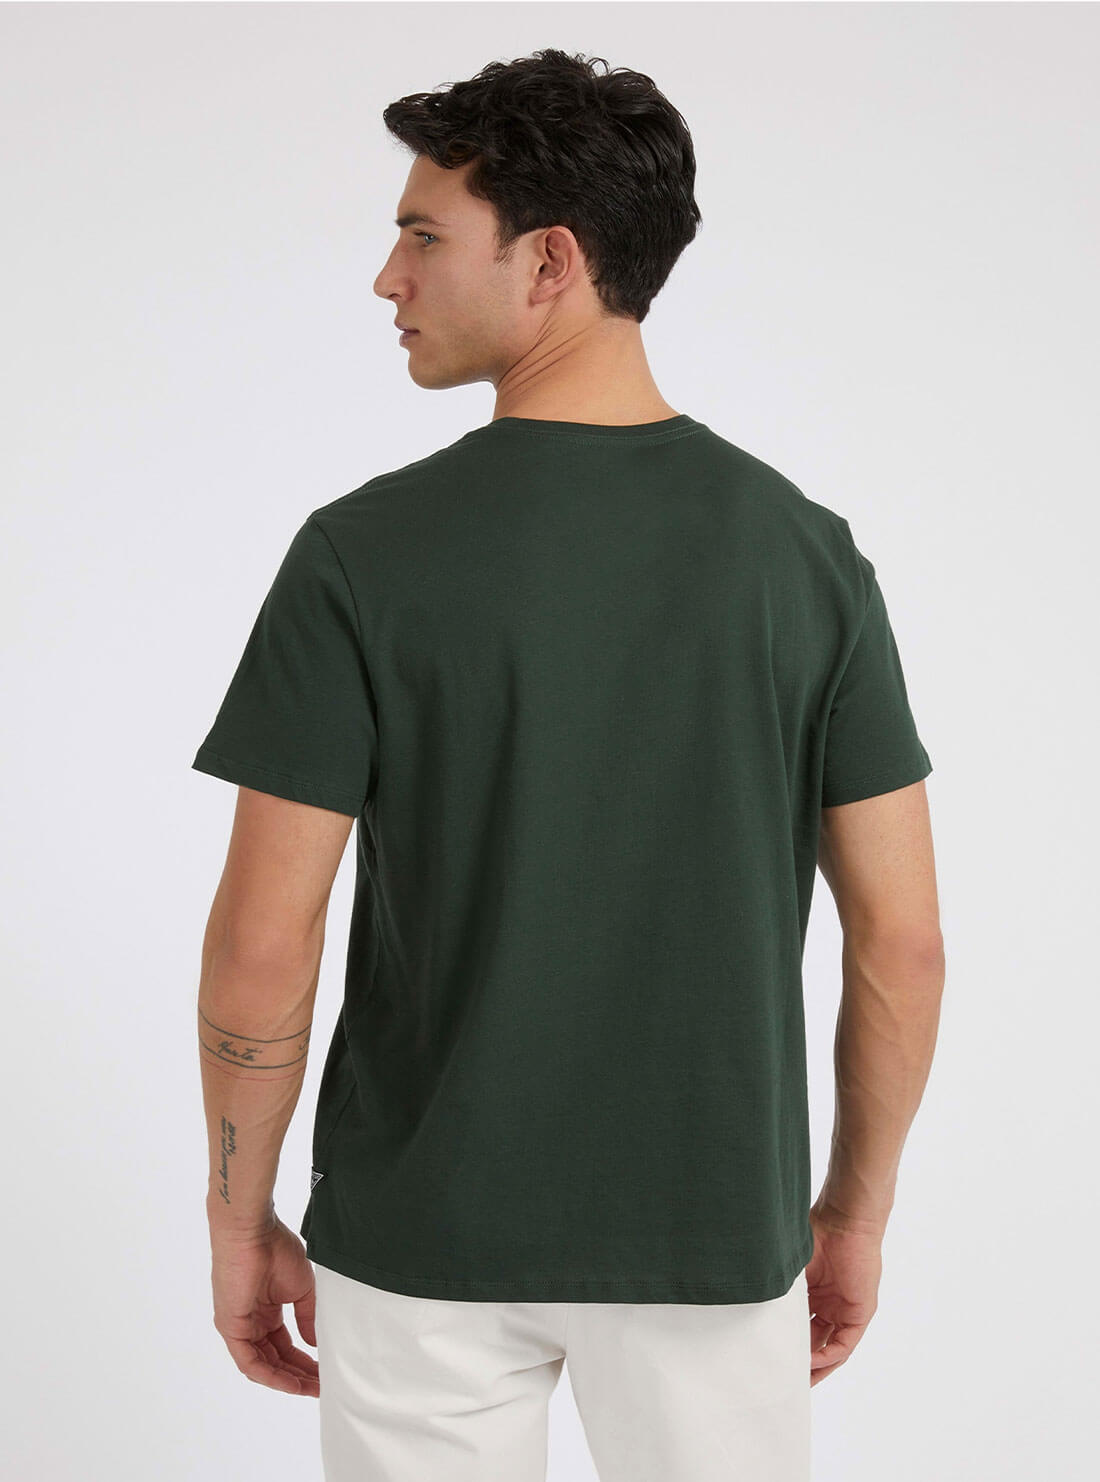 Eco Green Graffiti Logo T-Shirt | GUESS Men's Apparel | back view